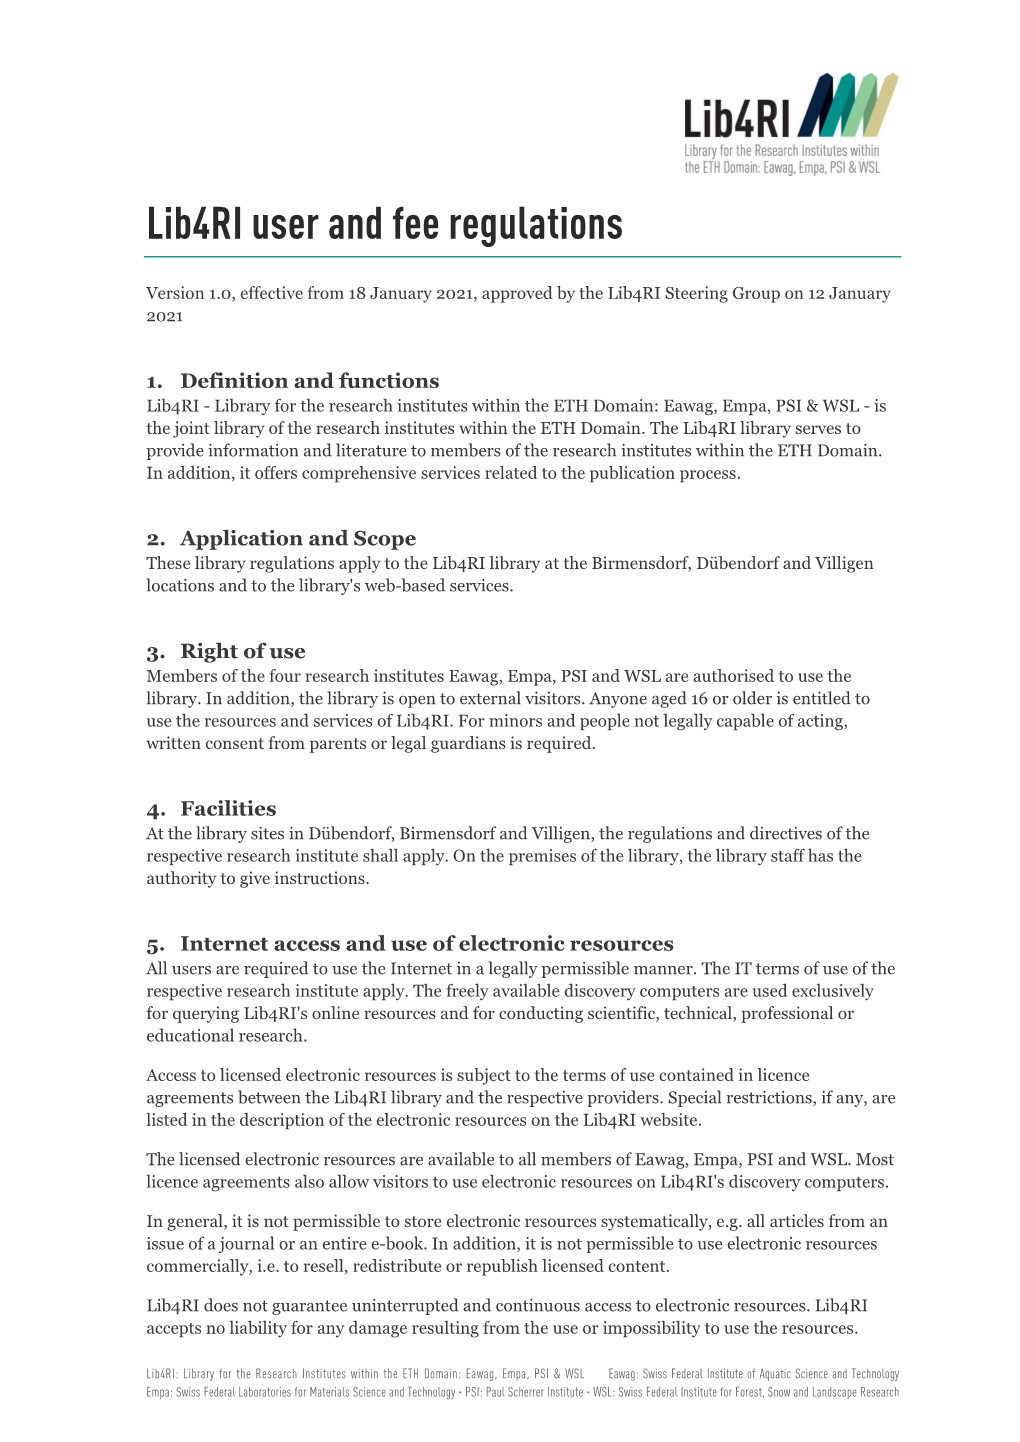 Lib4ri User and Fee Regulations